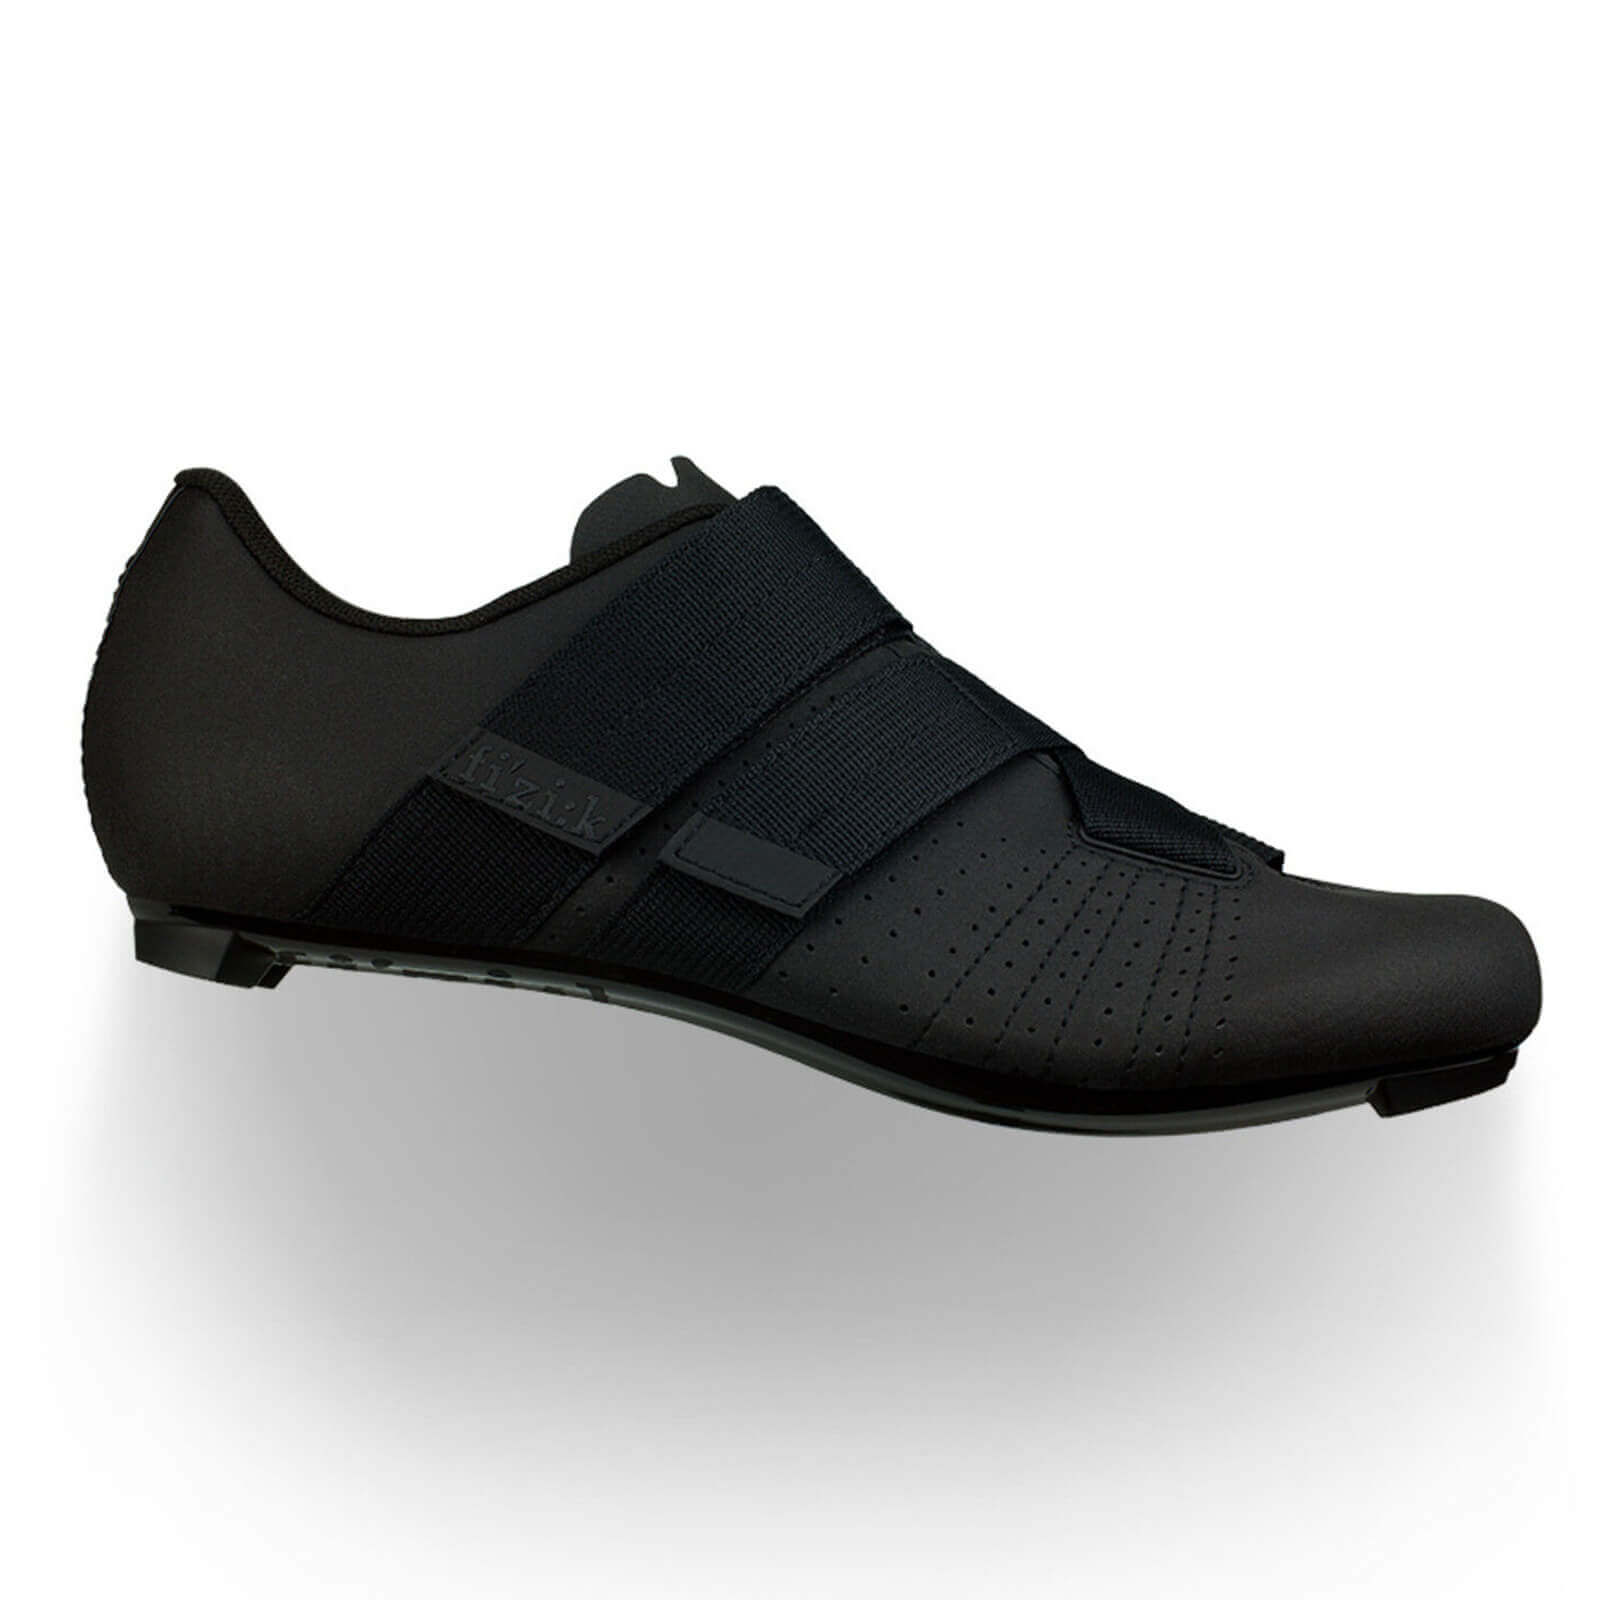 Fizik Tempo Powerstrap R5 Road Shoes - EU 47 - Black